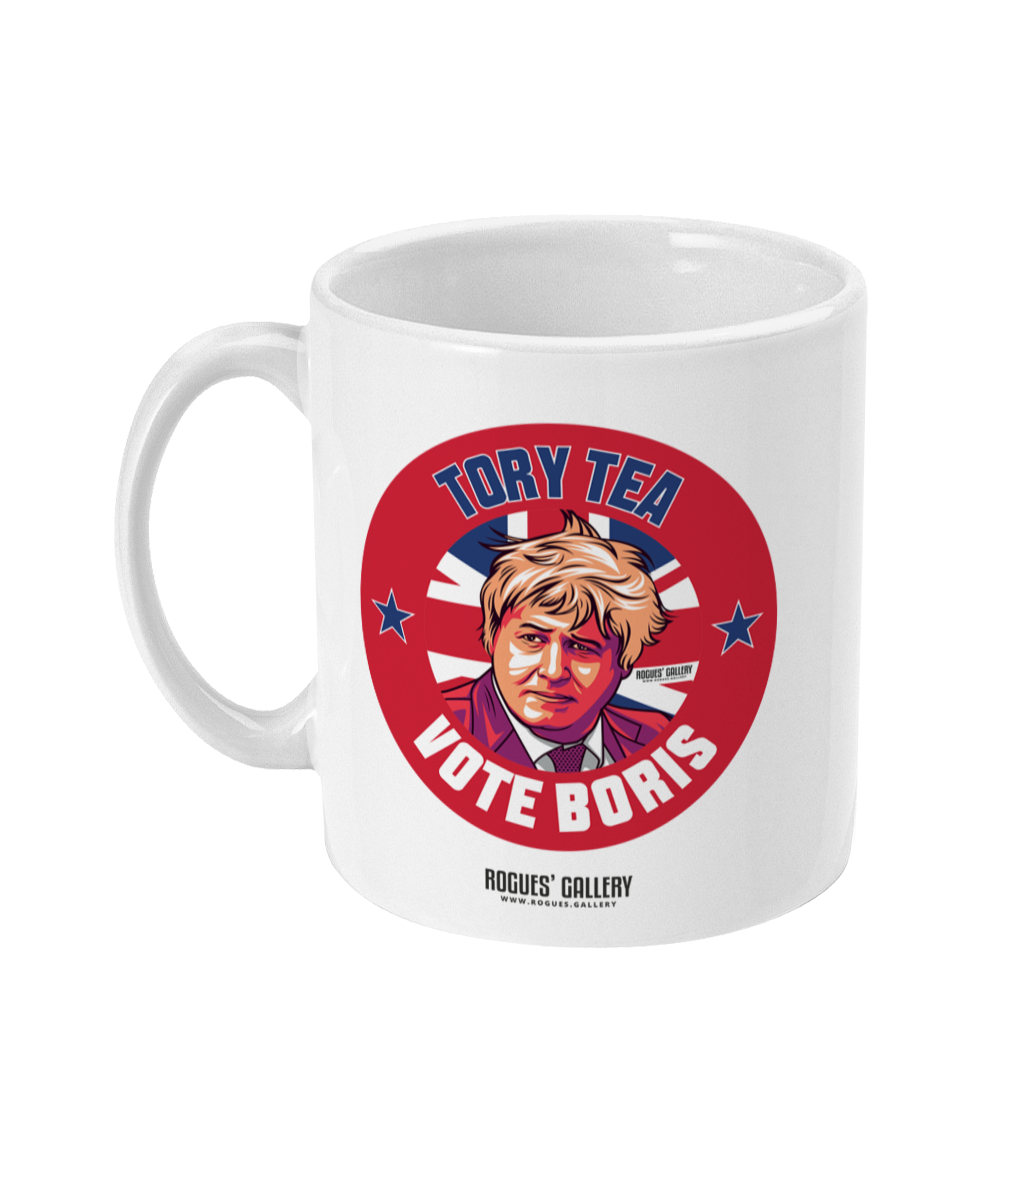 Boris Johnson mug tory tea